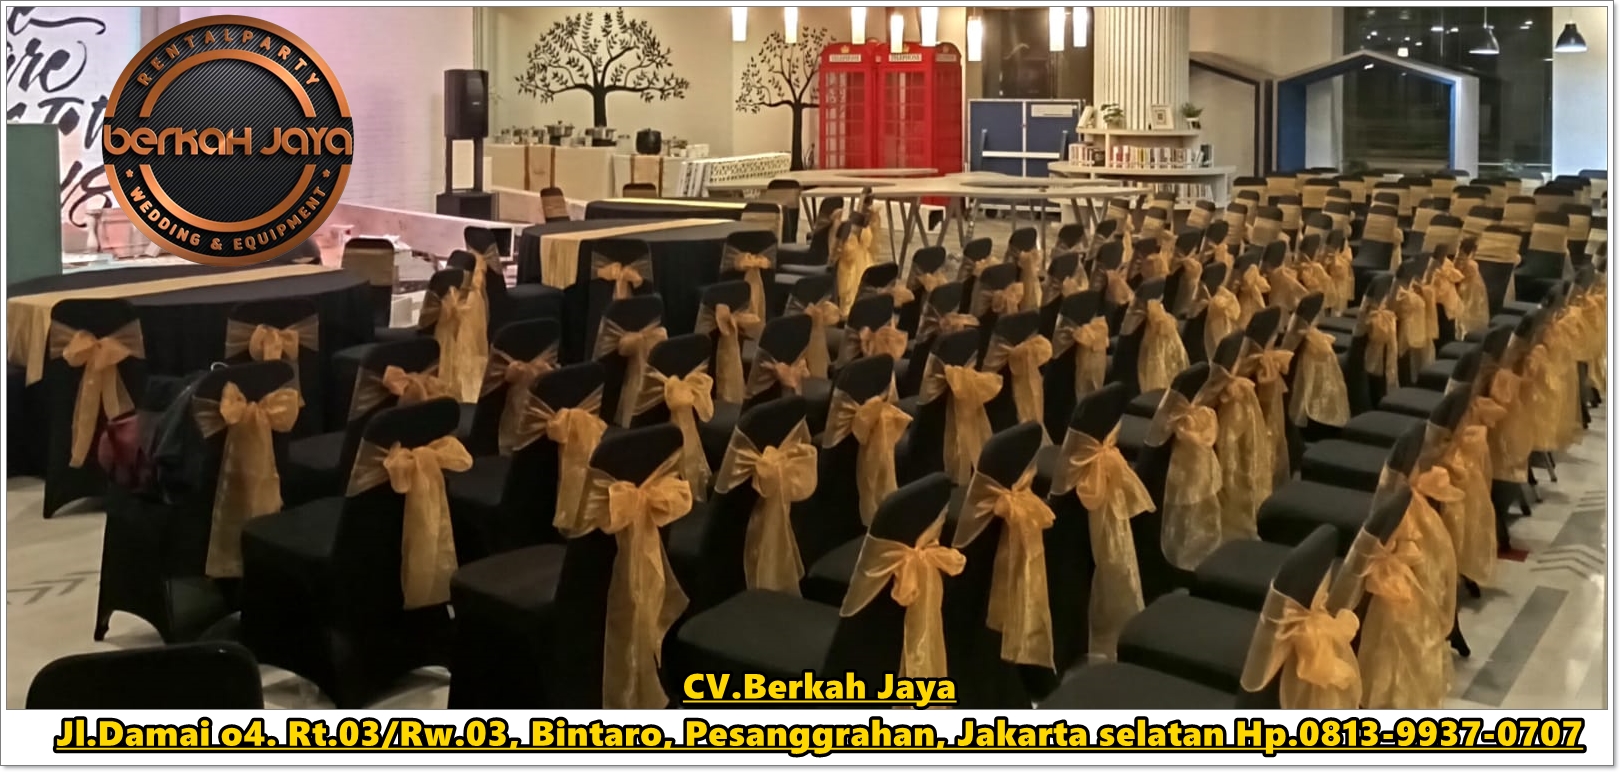 Pusat Jasa Sewa Kursi Pernikahan Jakarta